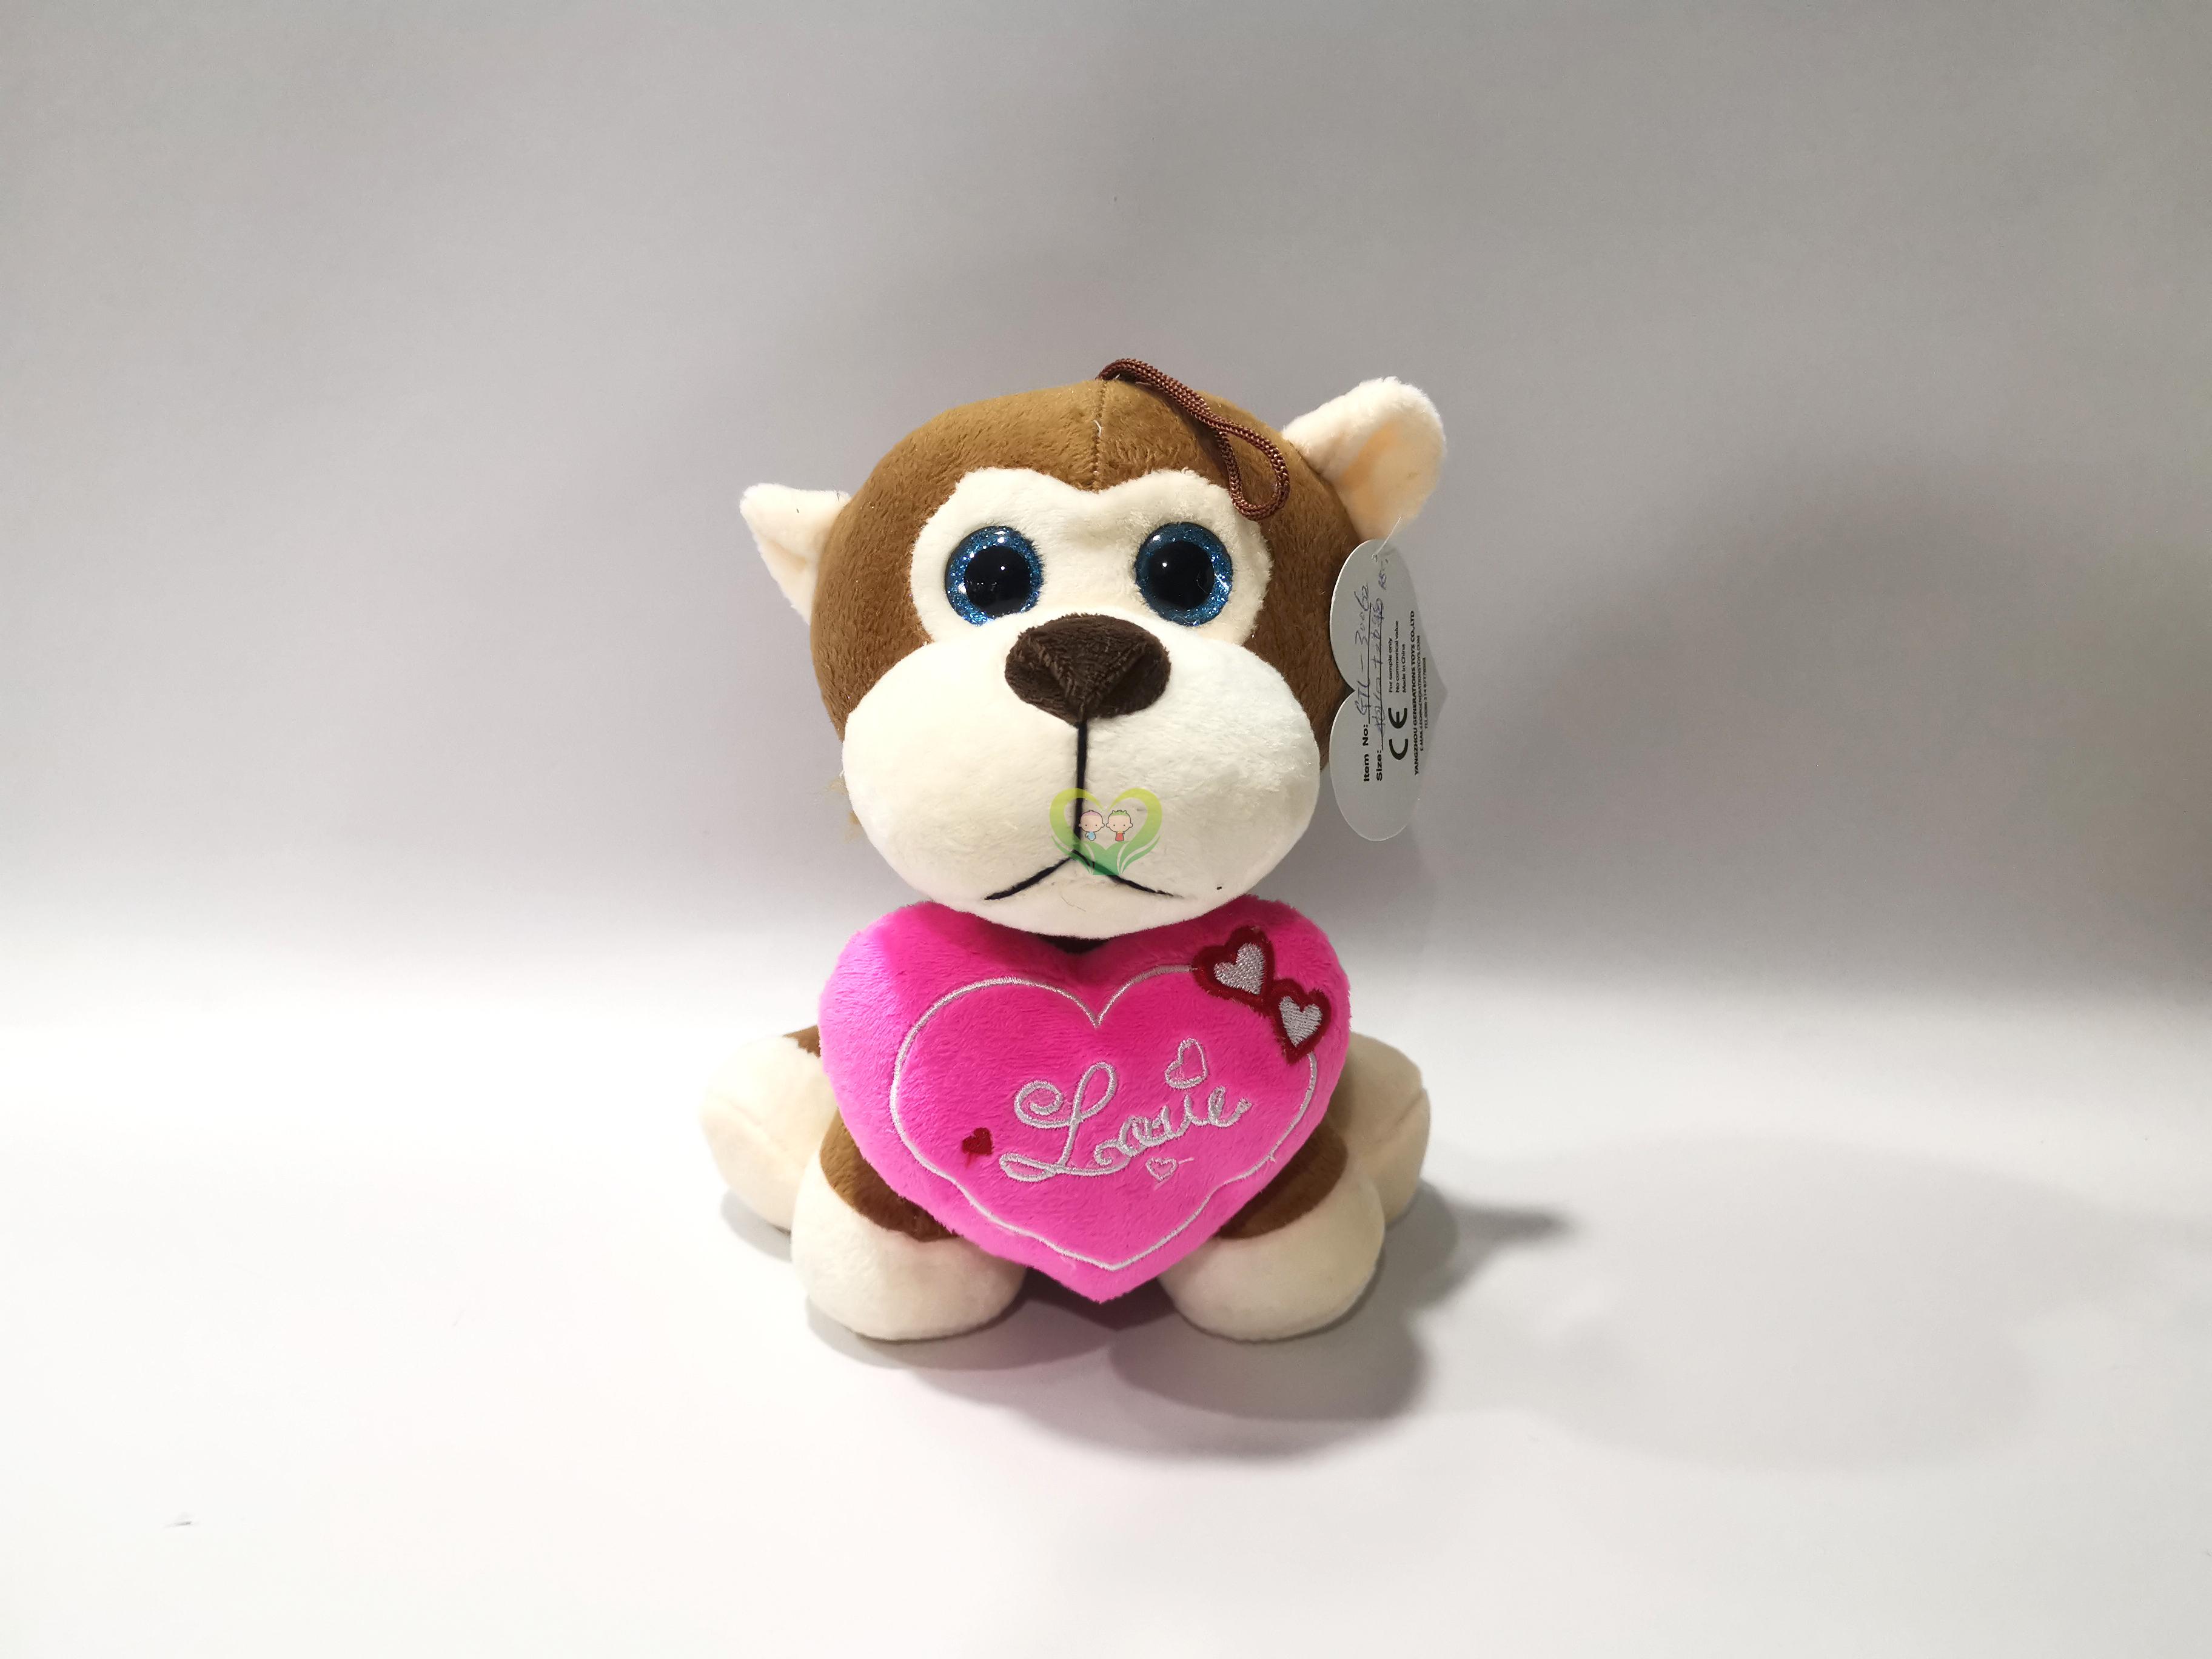 2019 Valentine Plush Toys: Three animals Monkey/Giraffe/Cow with Holding hearts